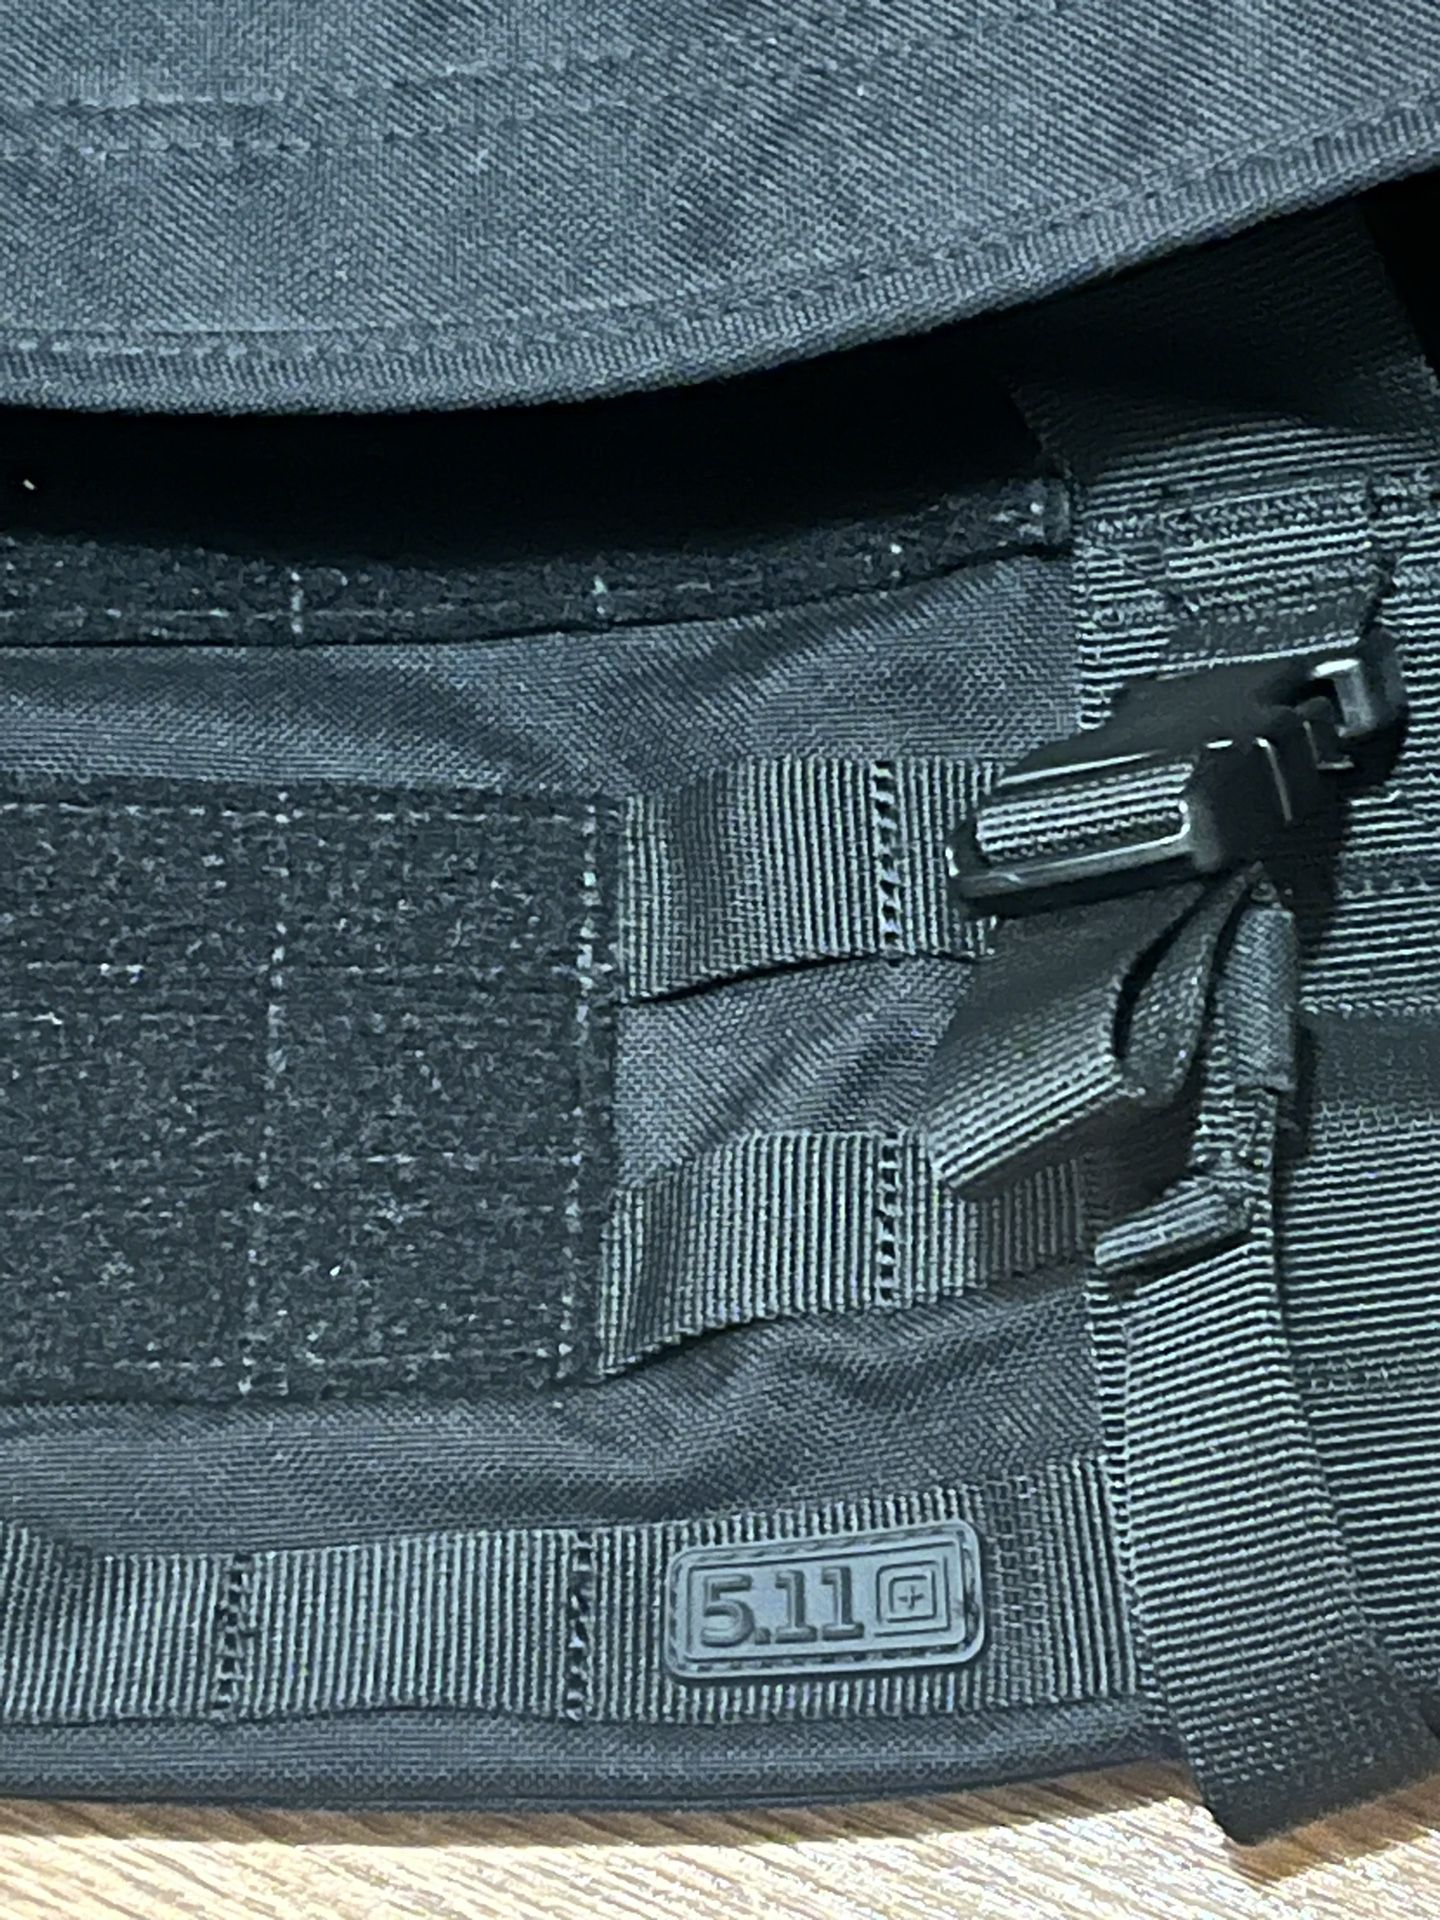 511 Tactical Duffle Bag